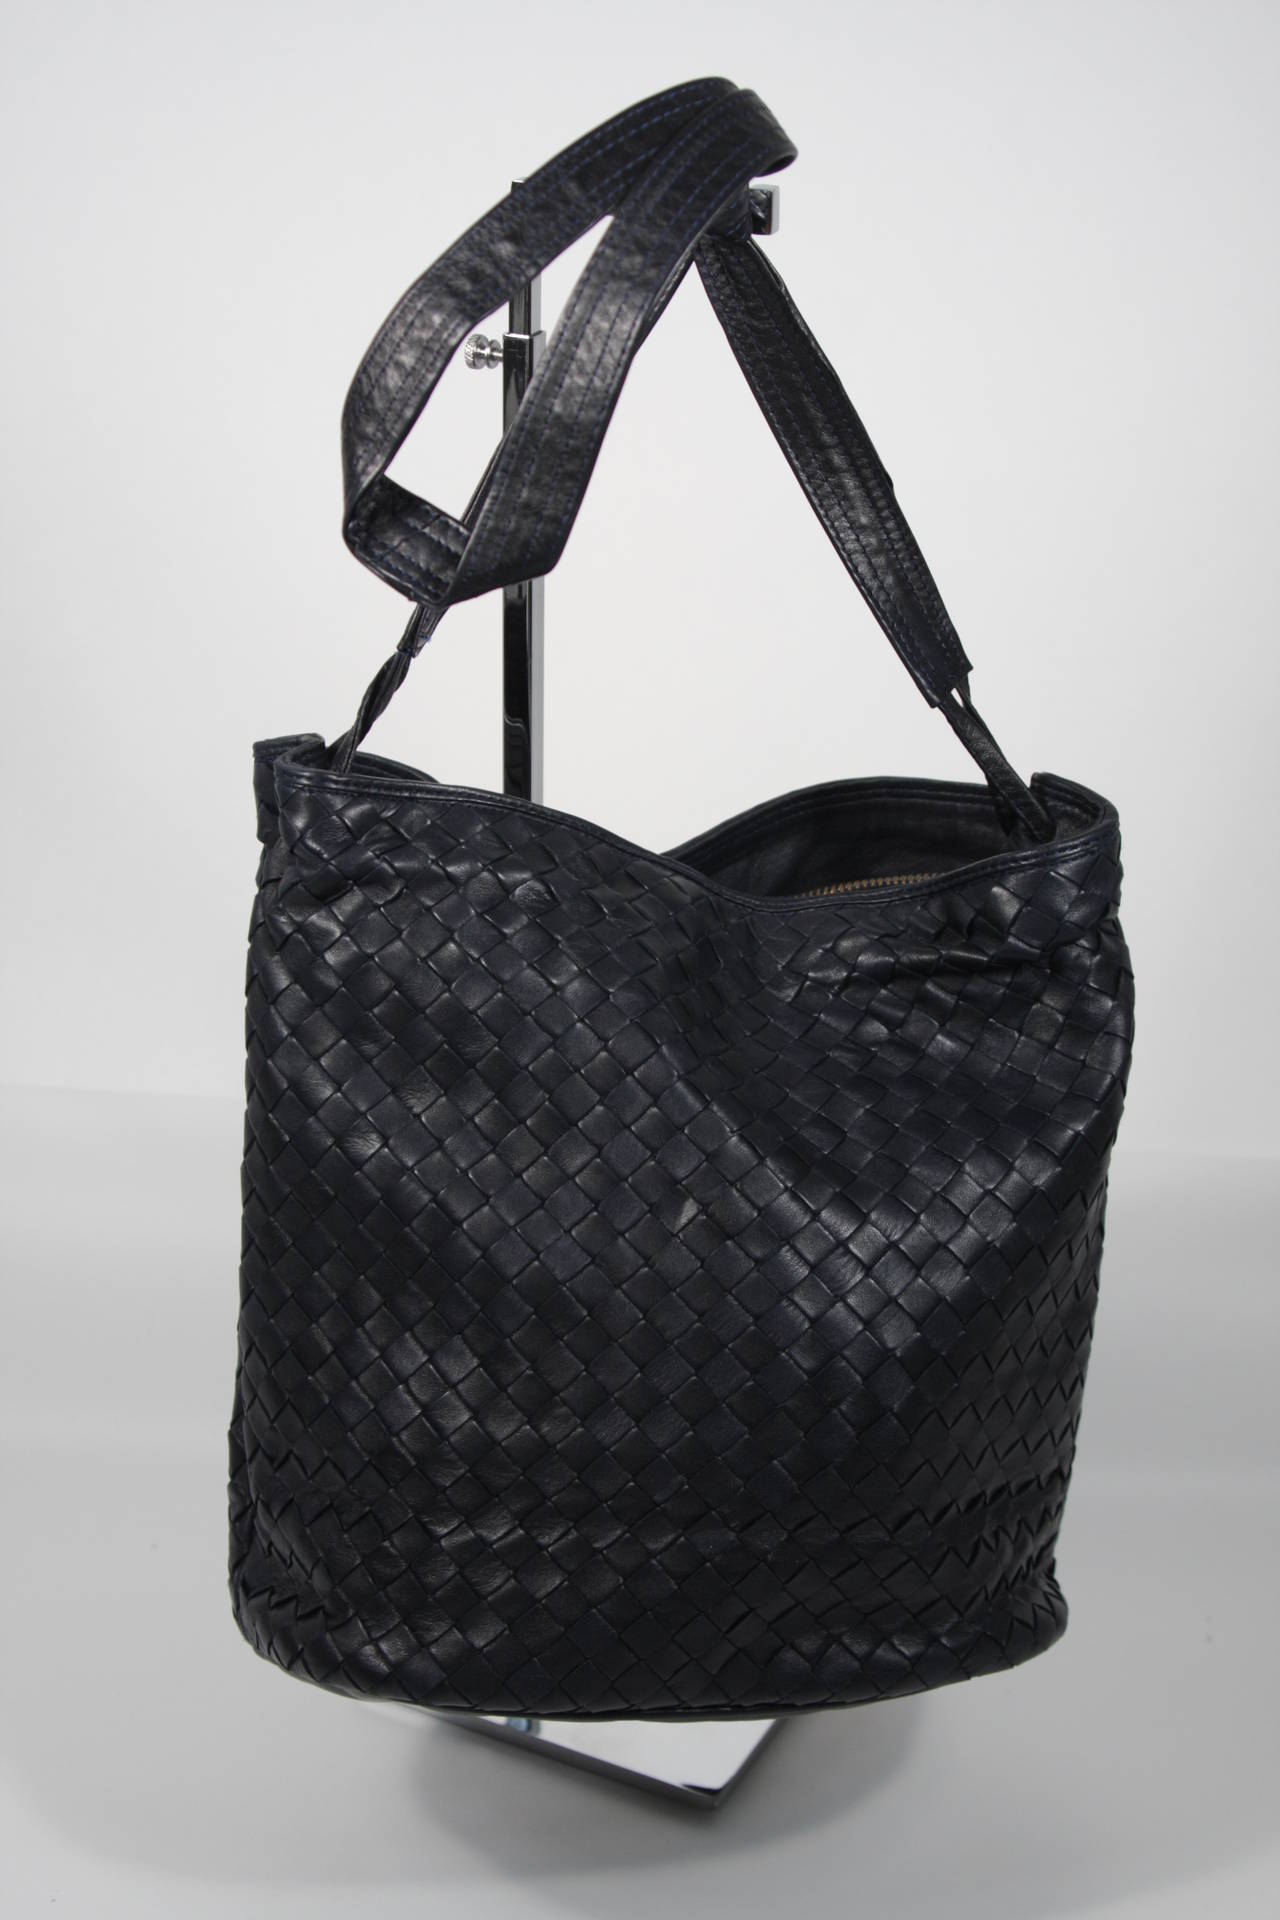 Bottega Veneta Vintage Navy Woven Leather Bucket Style Handbag 2